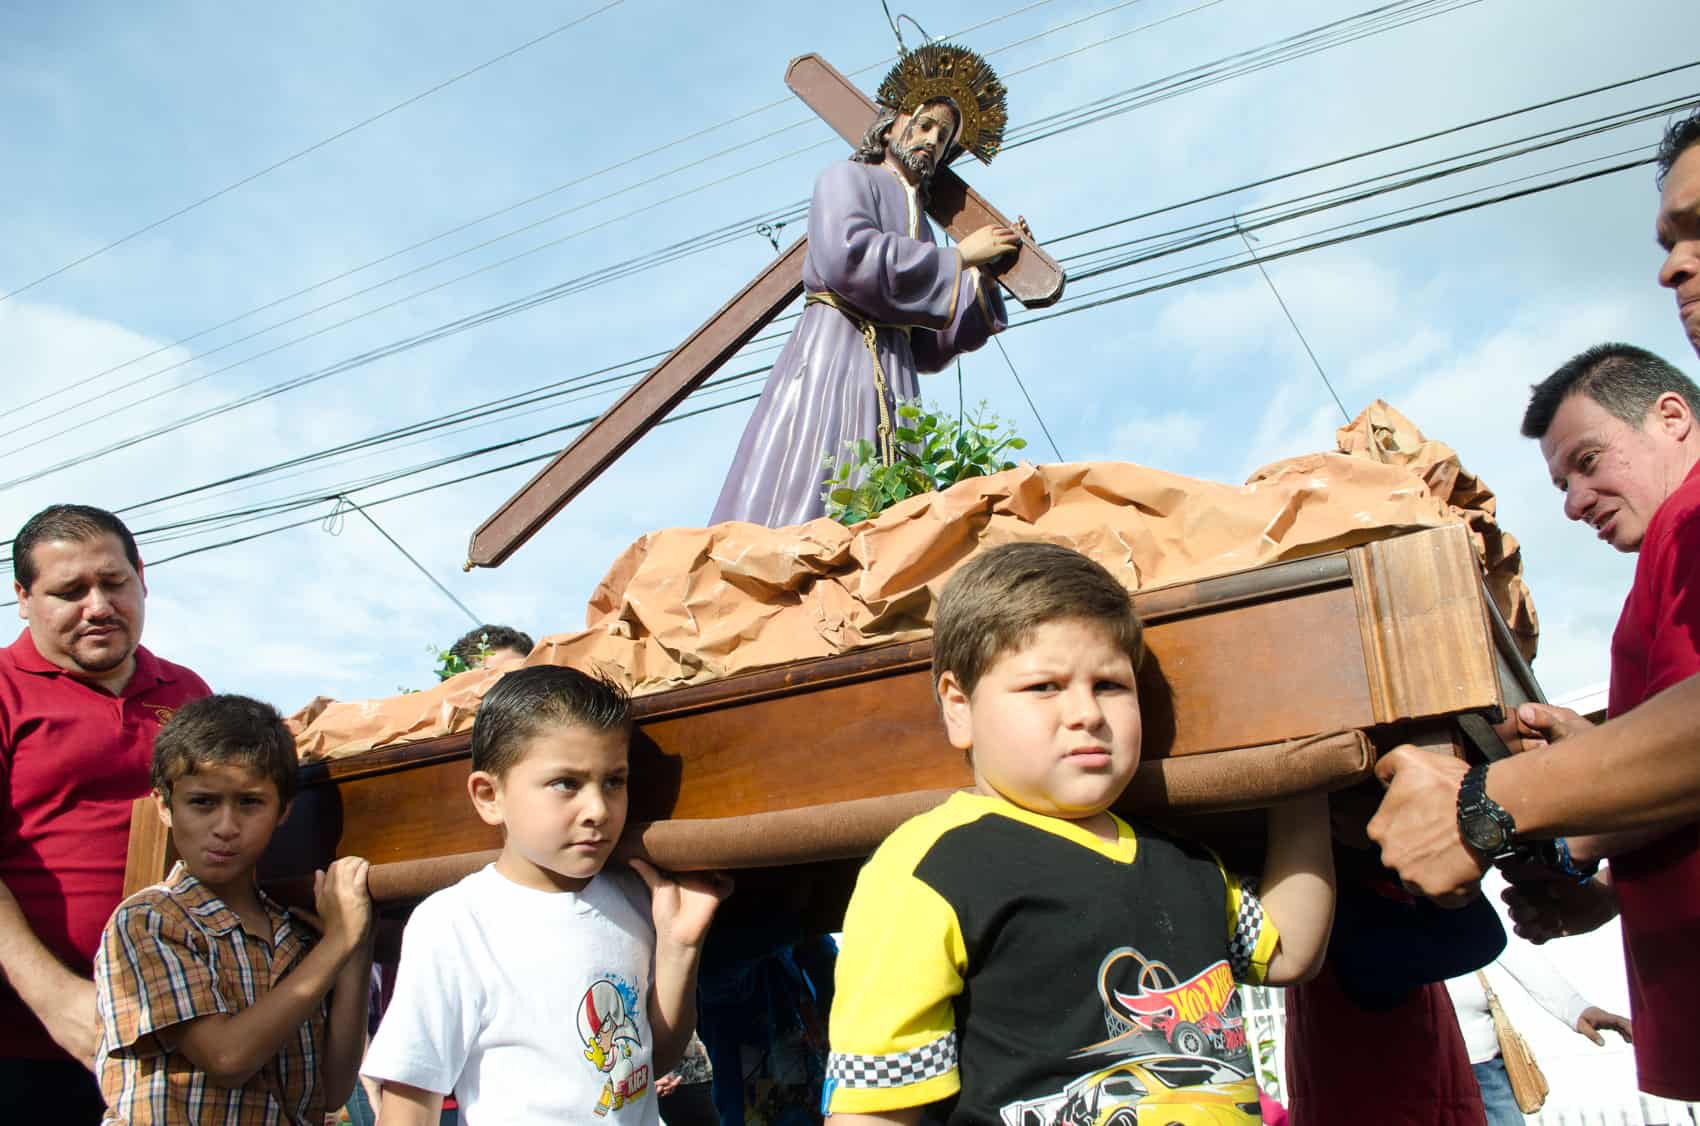 A Easter Procession in Costa Rica during Semana Santa